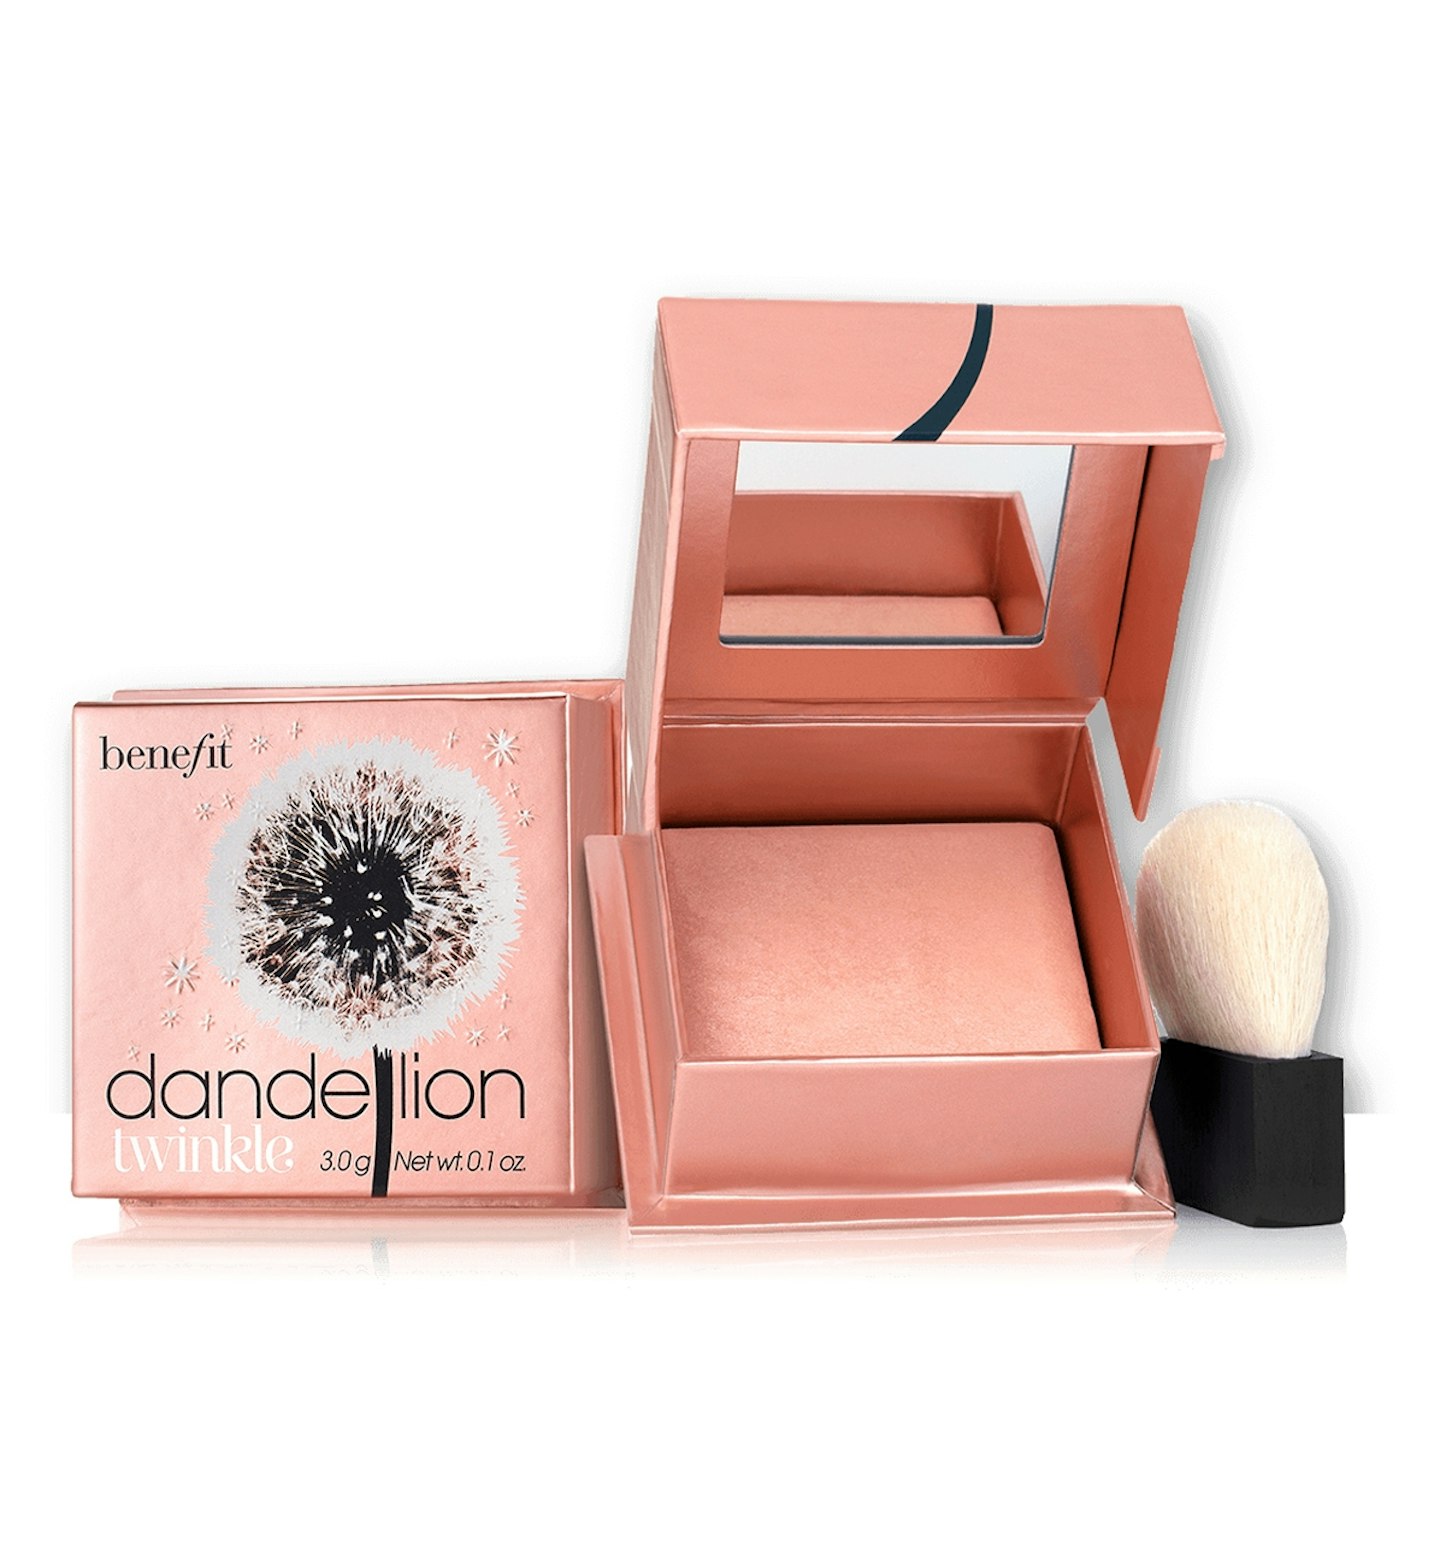 Benefit Dandelion Twinkle Highlighter Face Powder